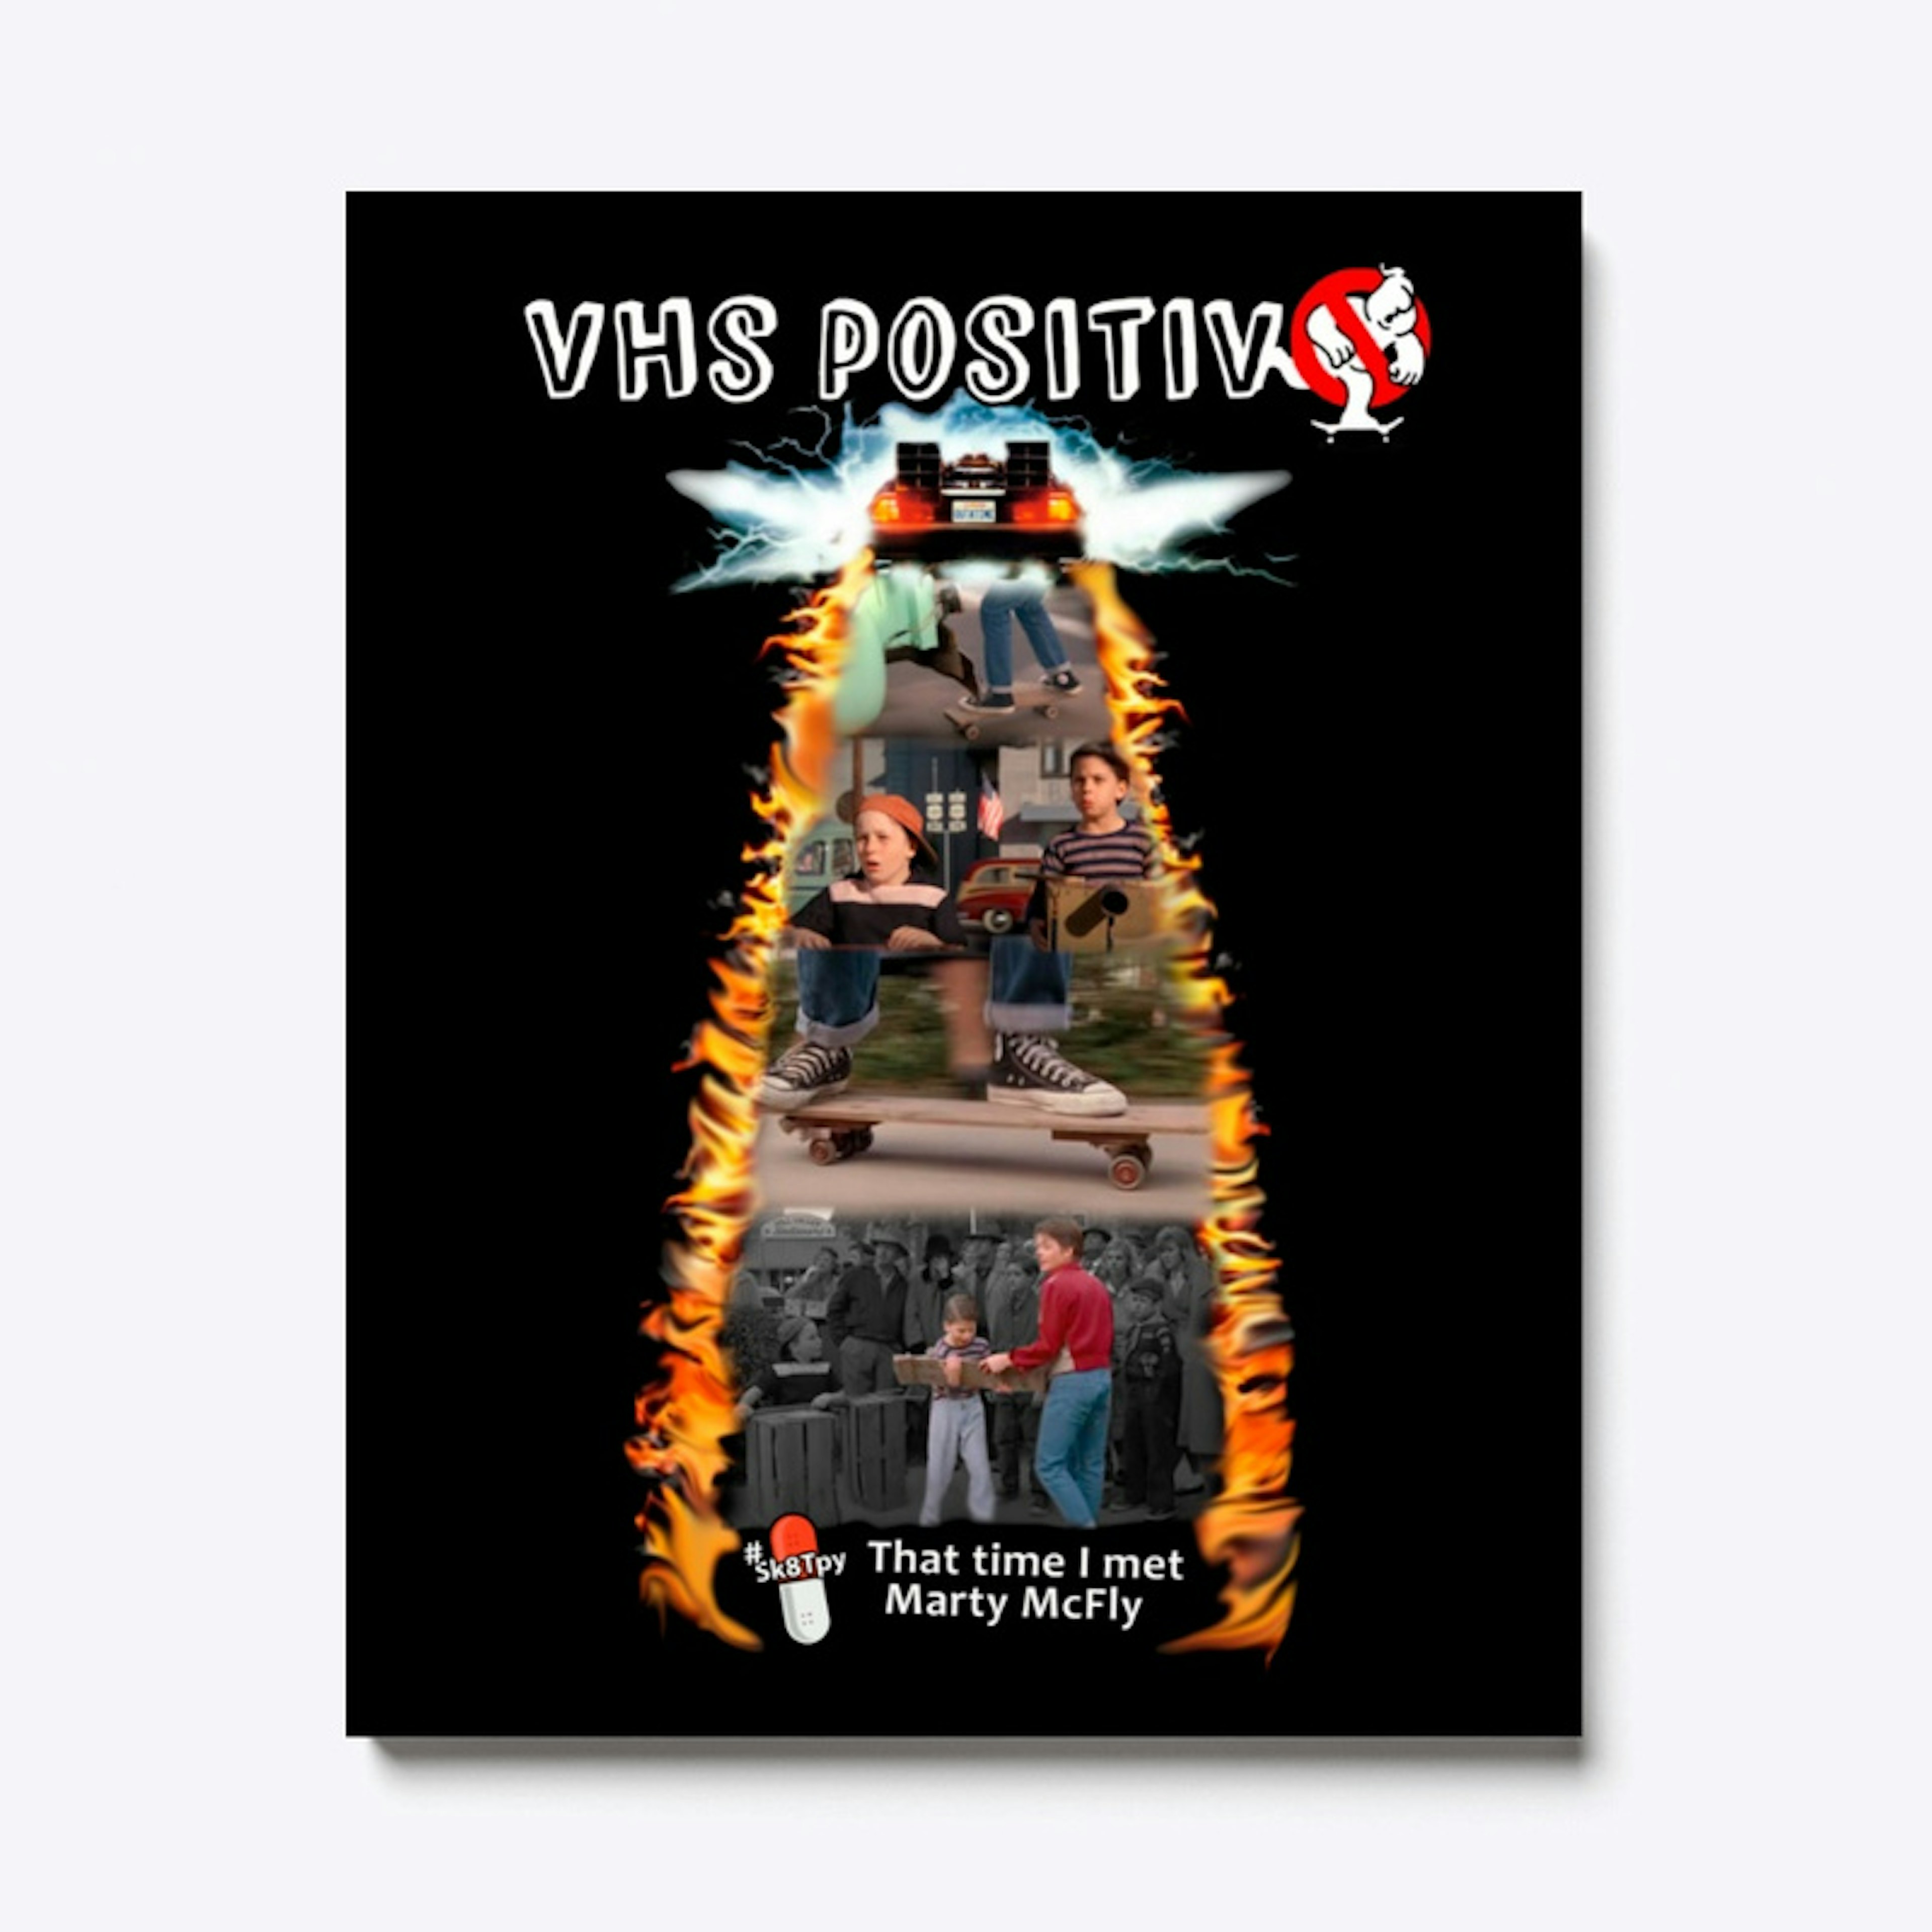 VHS positivo